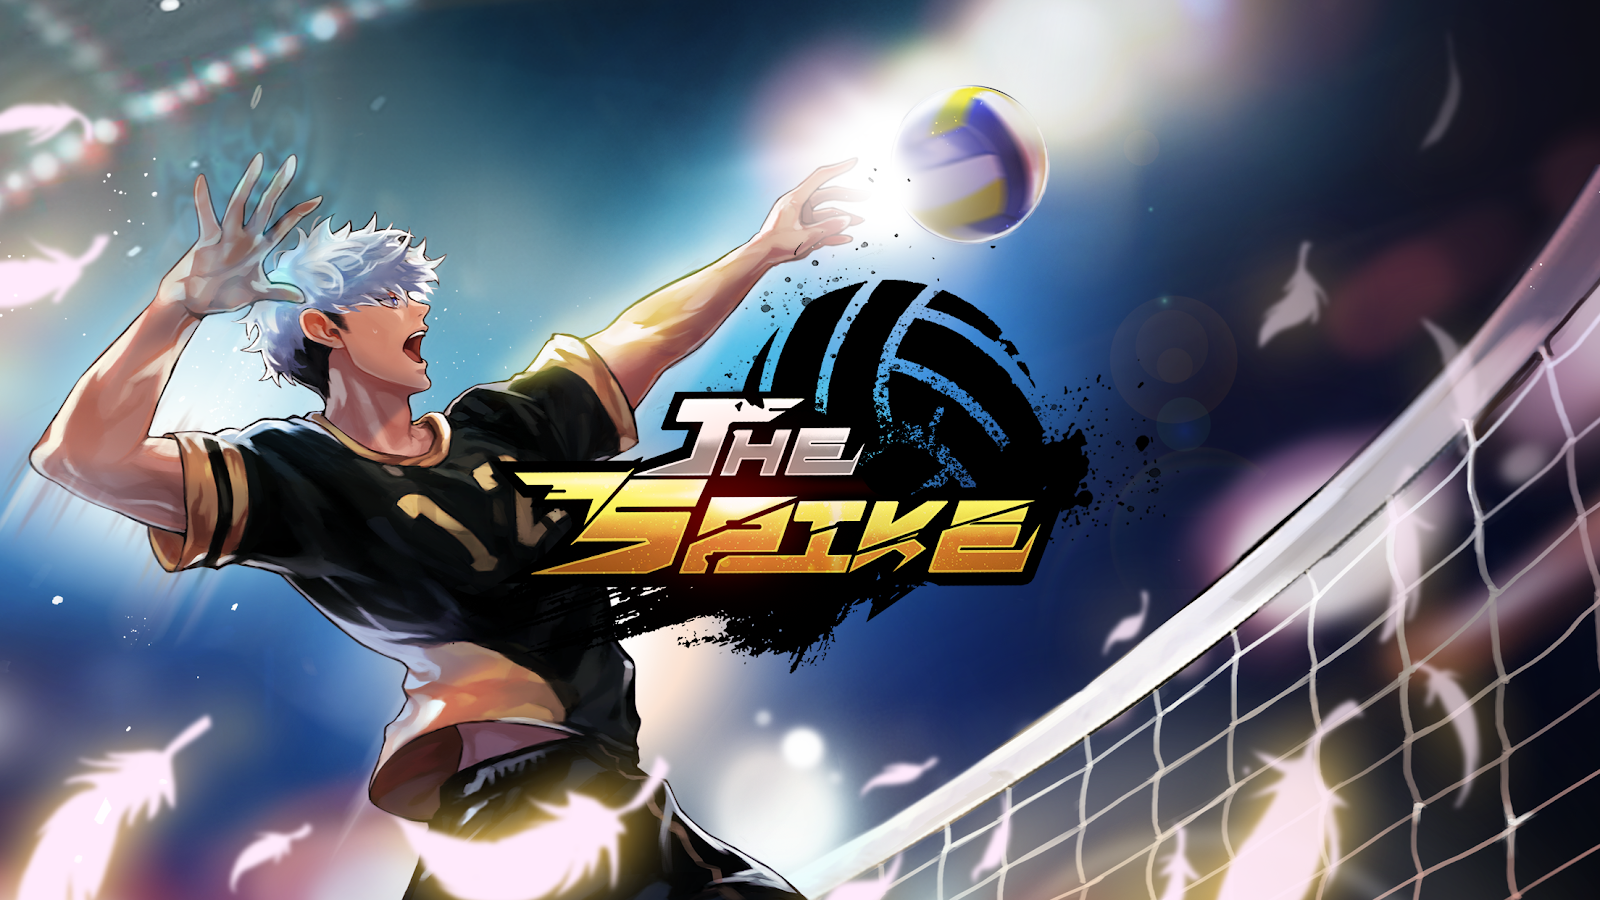 Игра the Spike. The Spike Volleyball игра. The Spike Volleyball story. Nishikawa волейбол the Spike. Установить игру волейбол